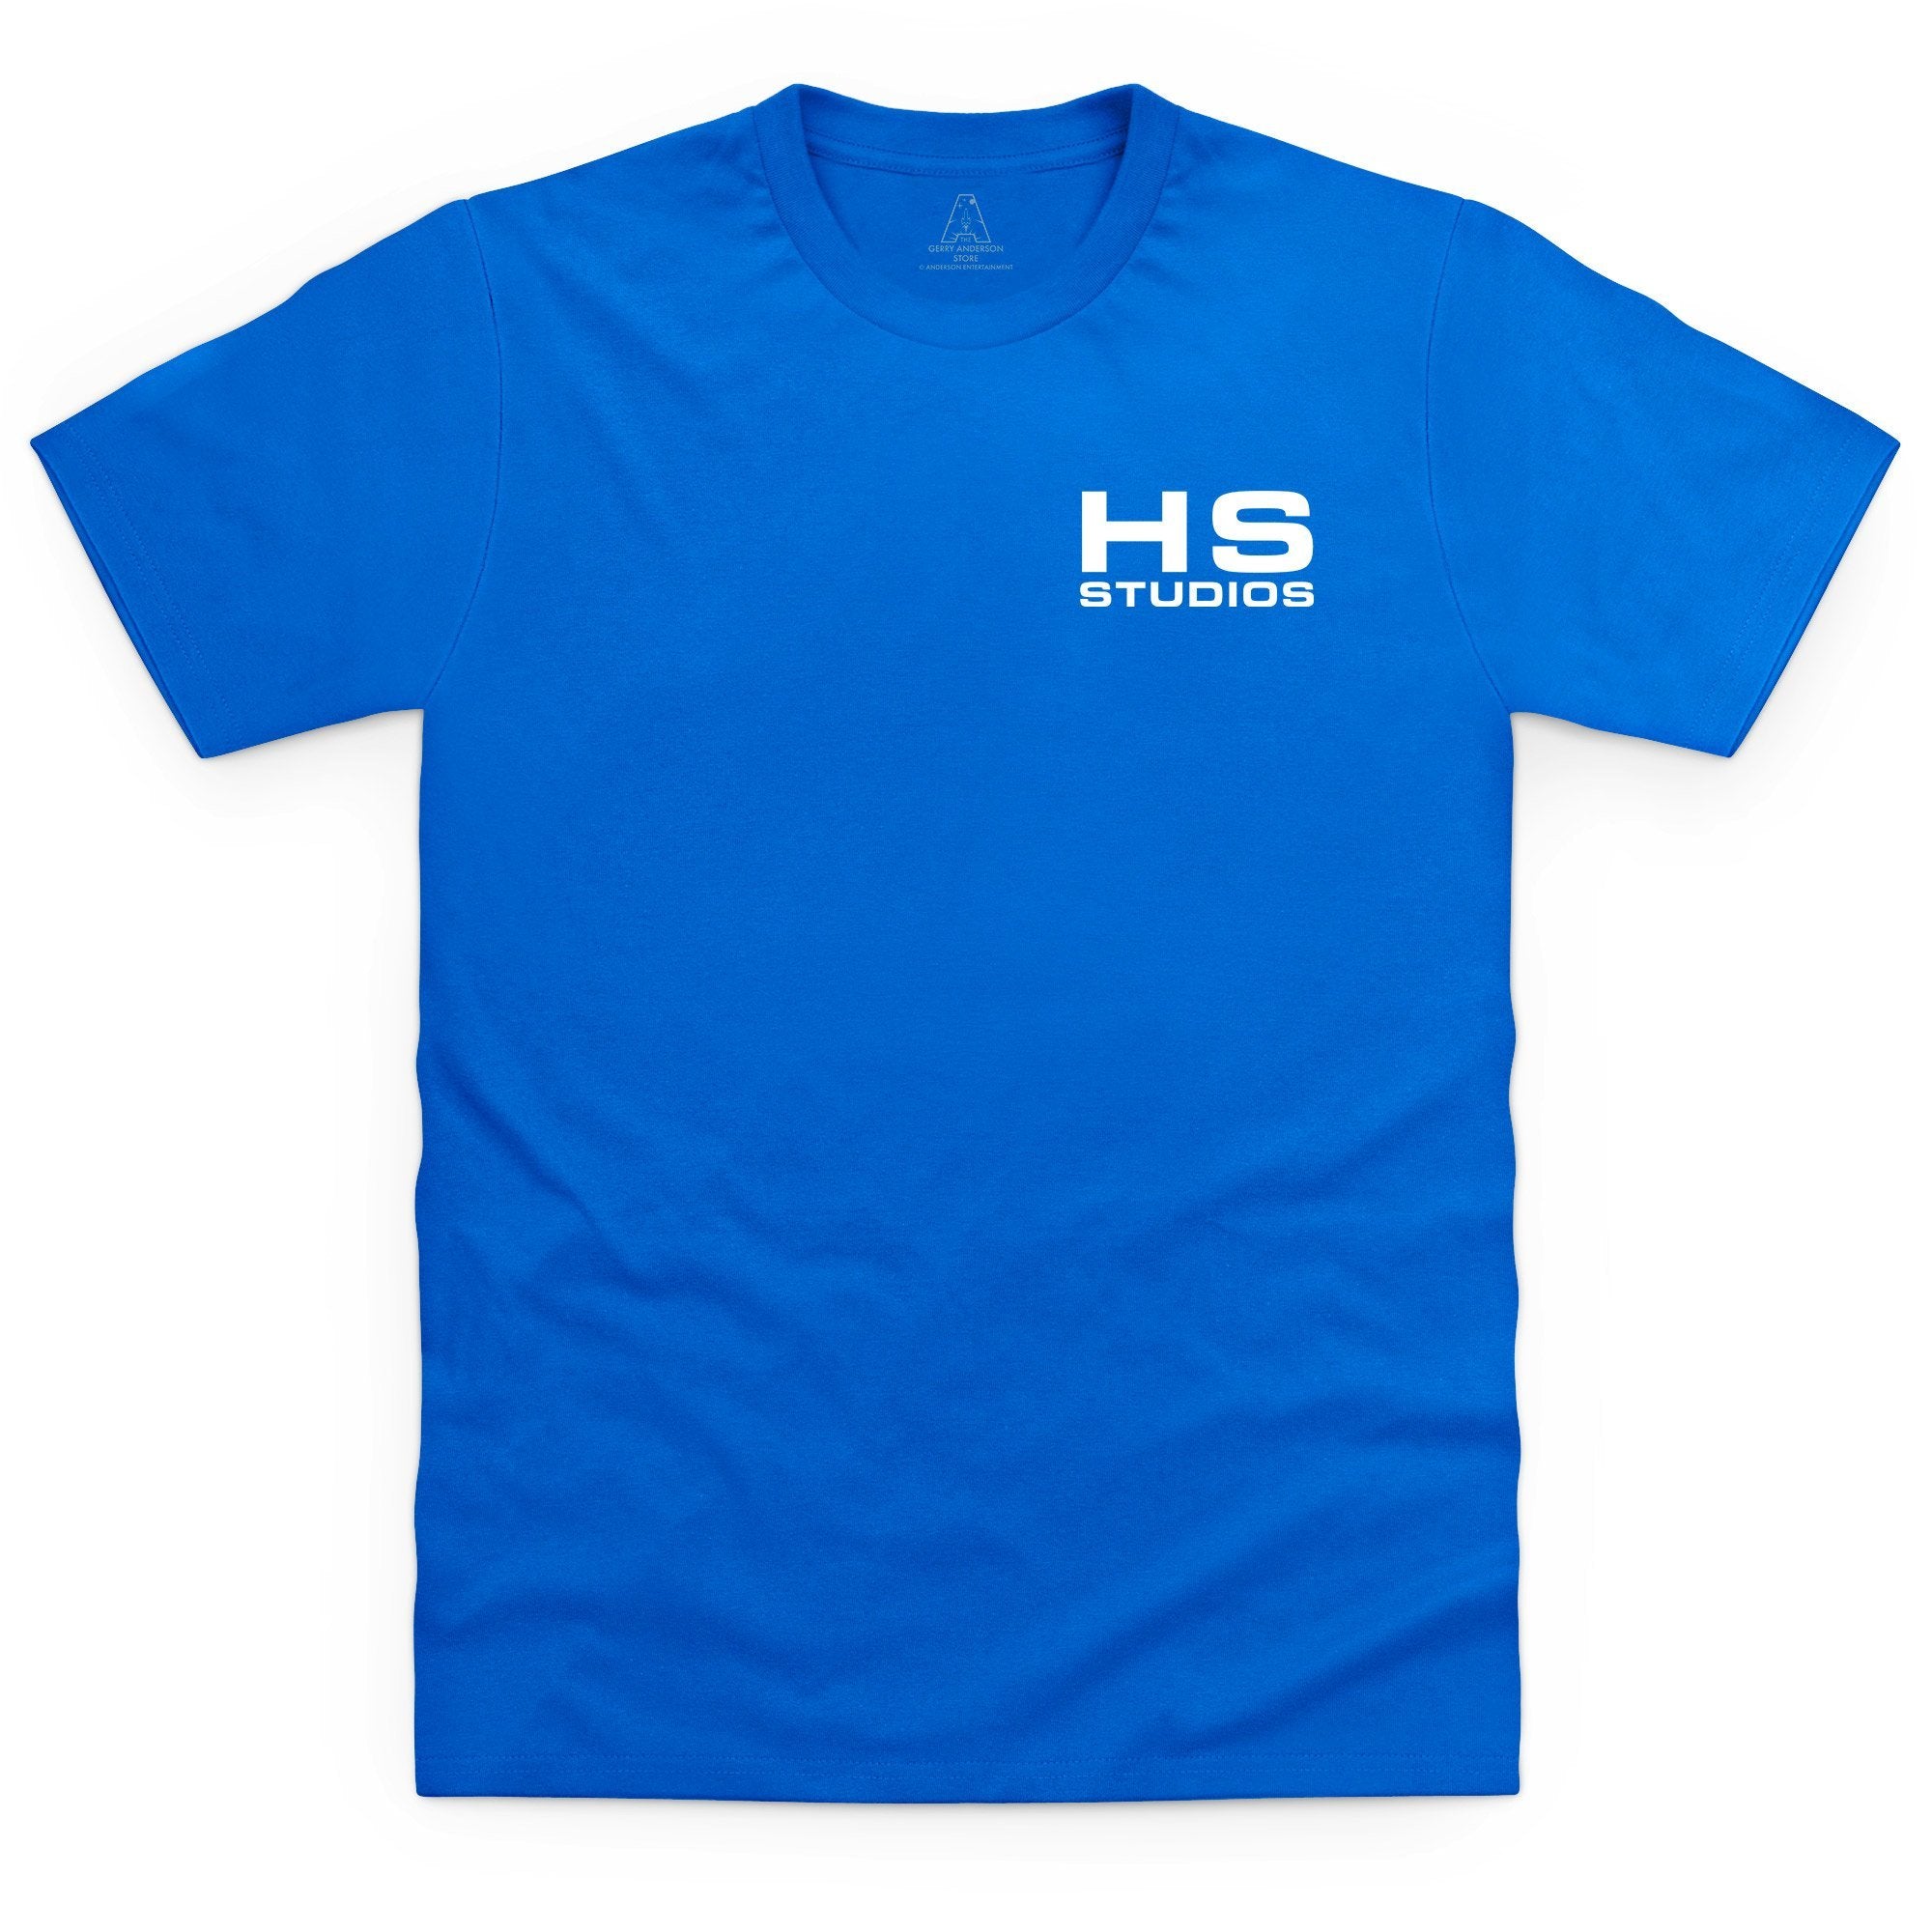 Harlington-Straker Studios Logo Men's T-Shirt - The Gerry Anderson Store